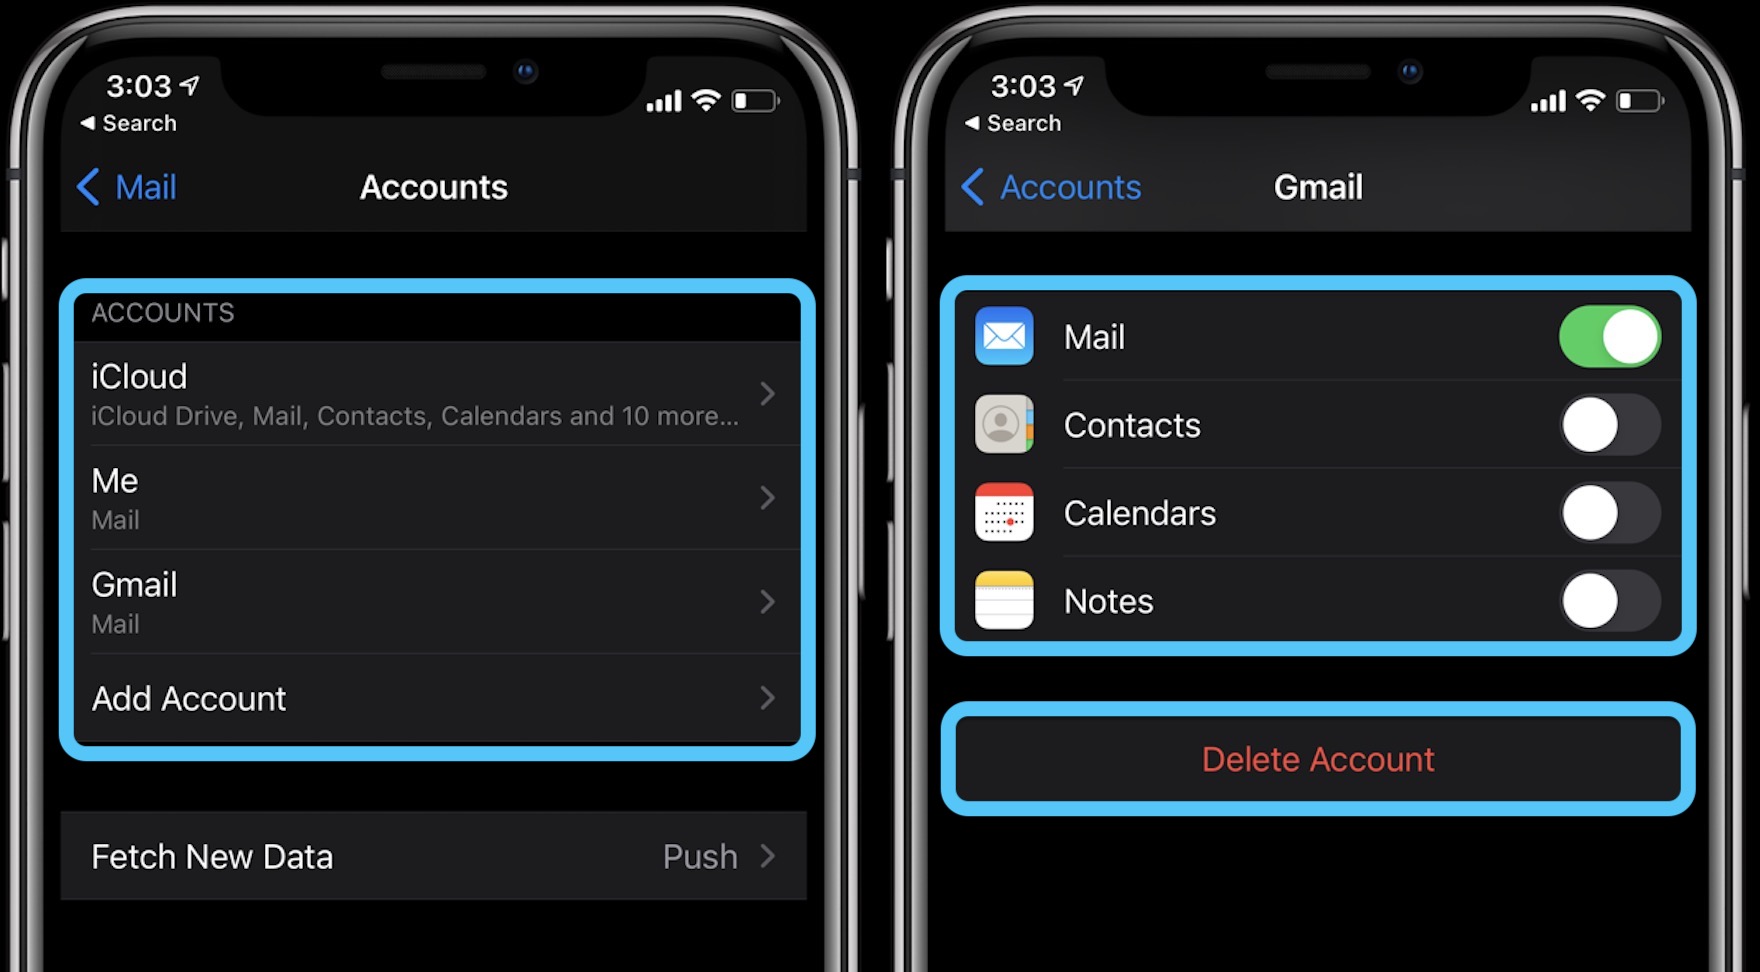 How to add edit iPhone accounts in iOS 14 walkthrough 2